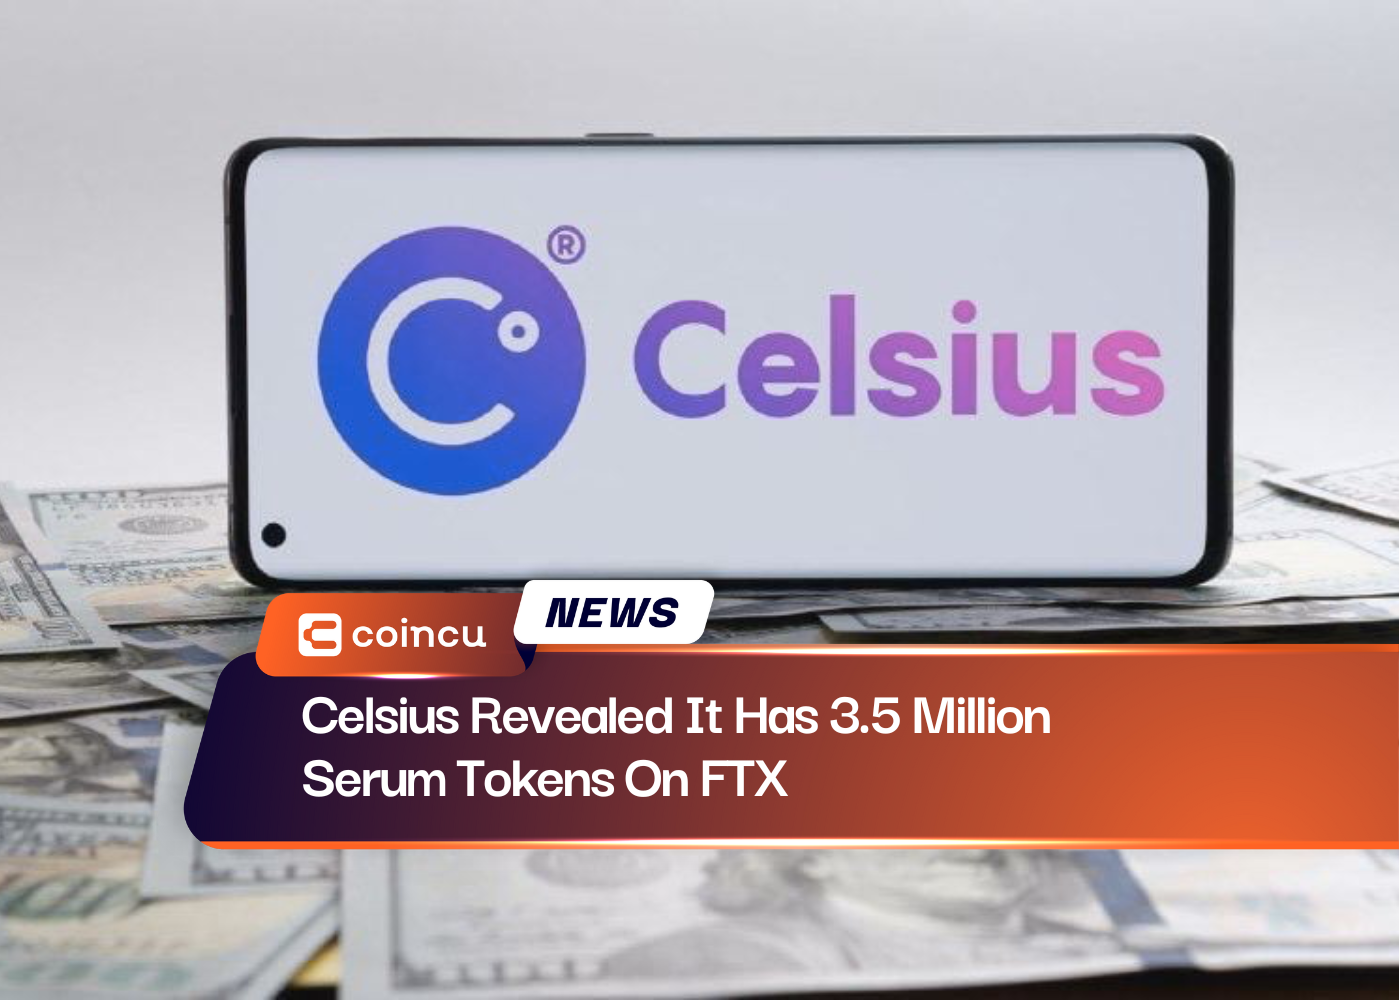 Celsius Revealed It Has 3.5 Million Serum Tokens On FTX